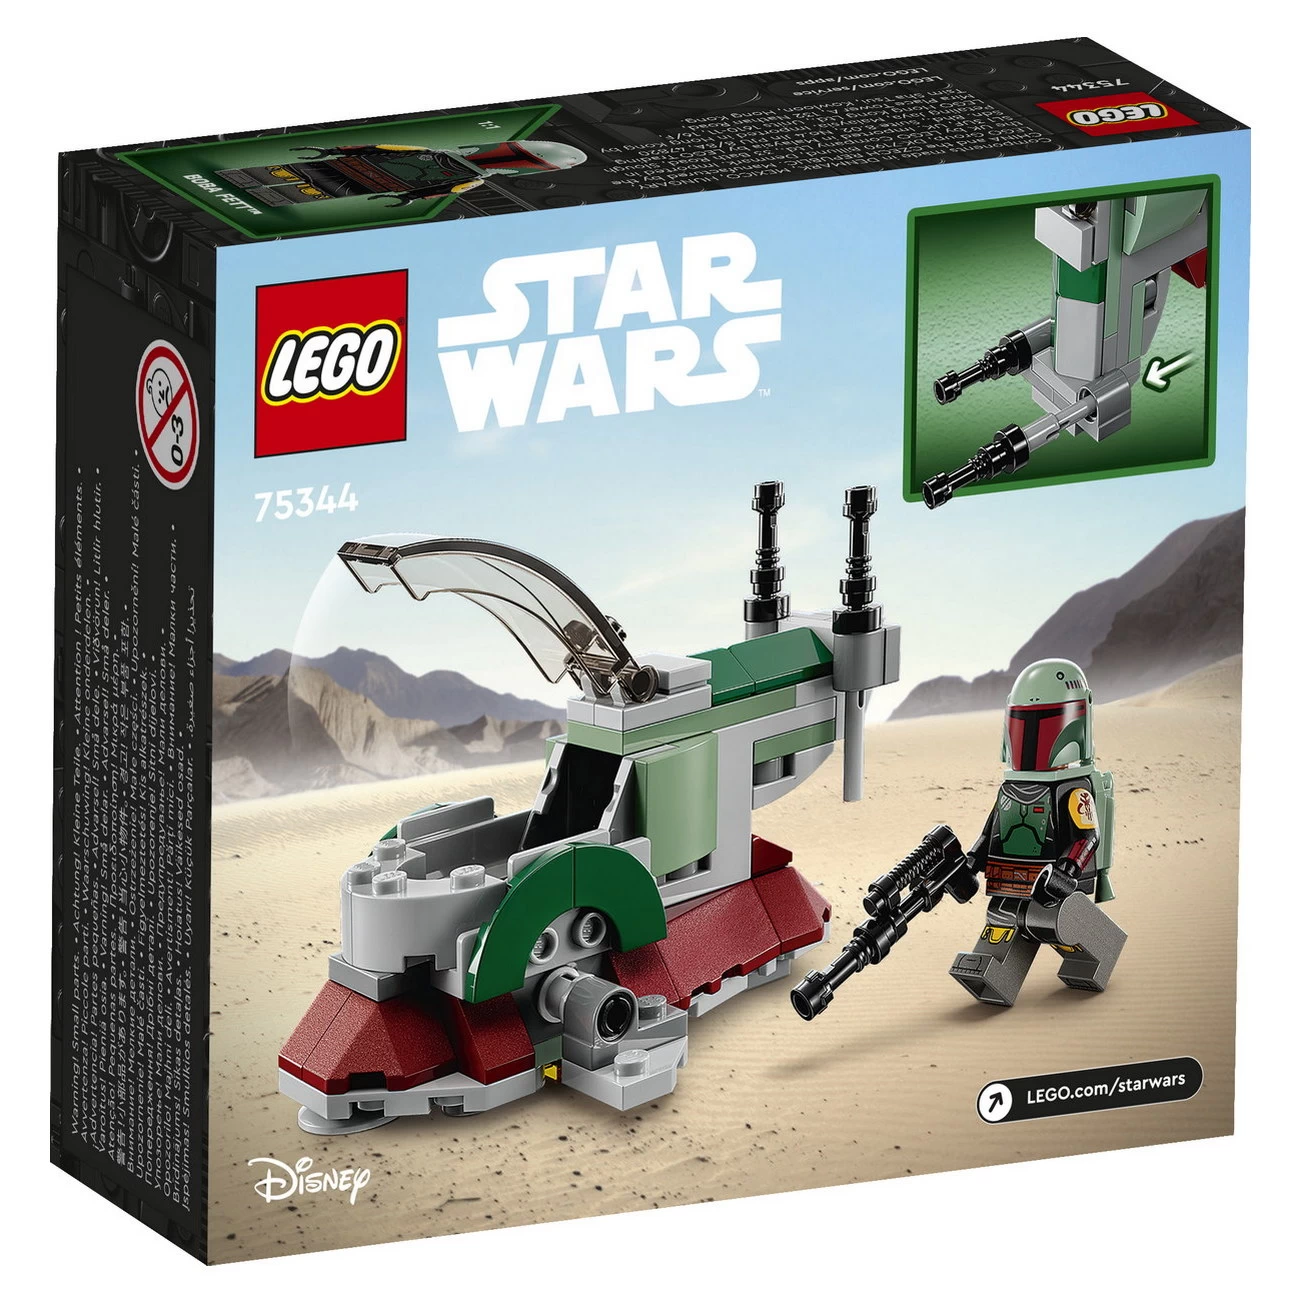 LEGO Star Wars 75344 - Boba Fetts Starship Microfighter